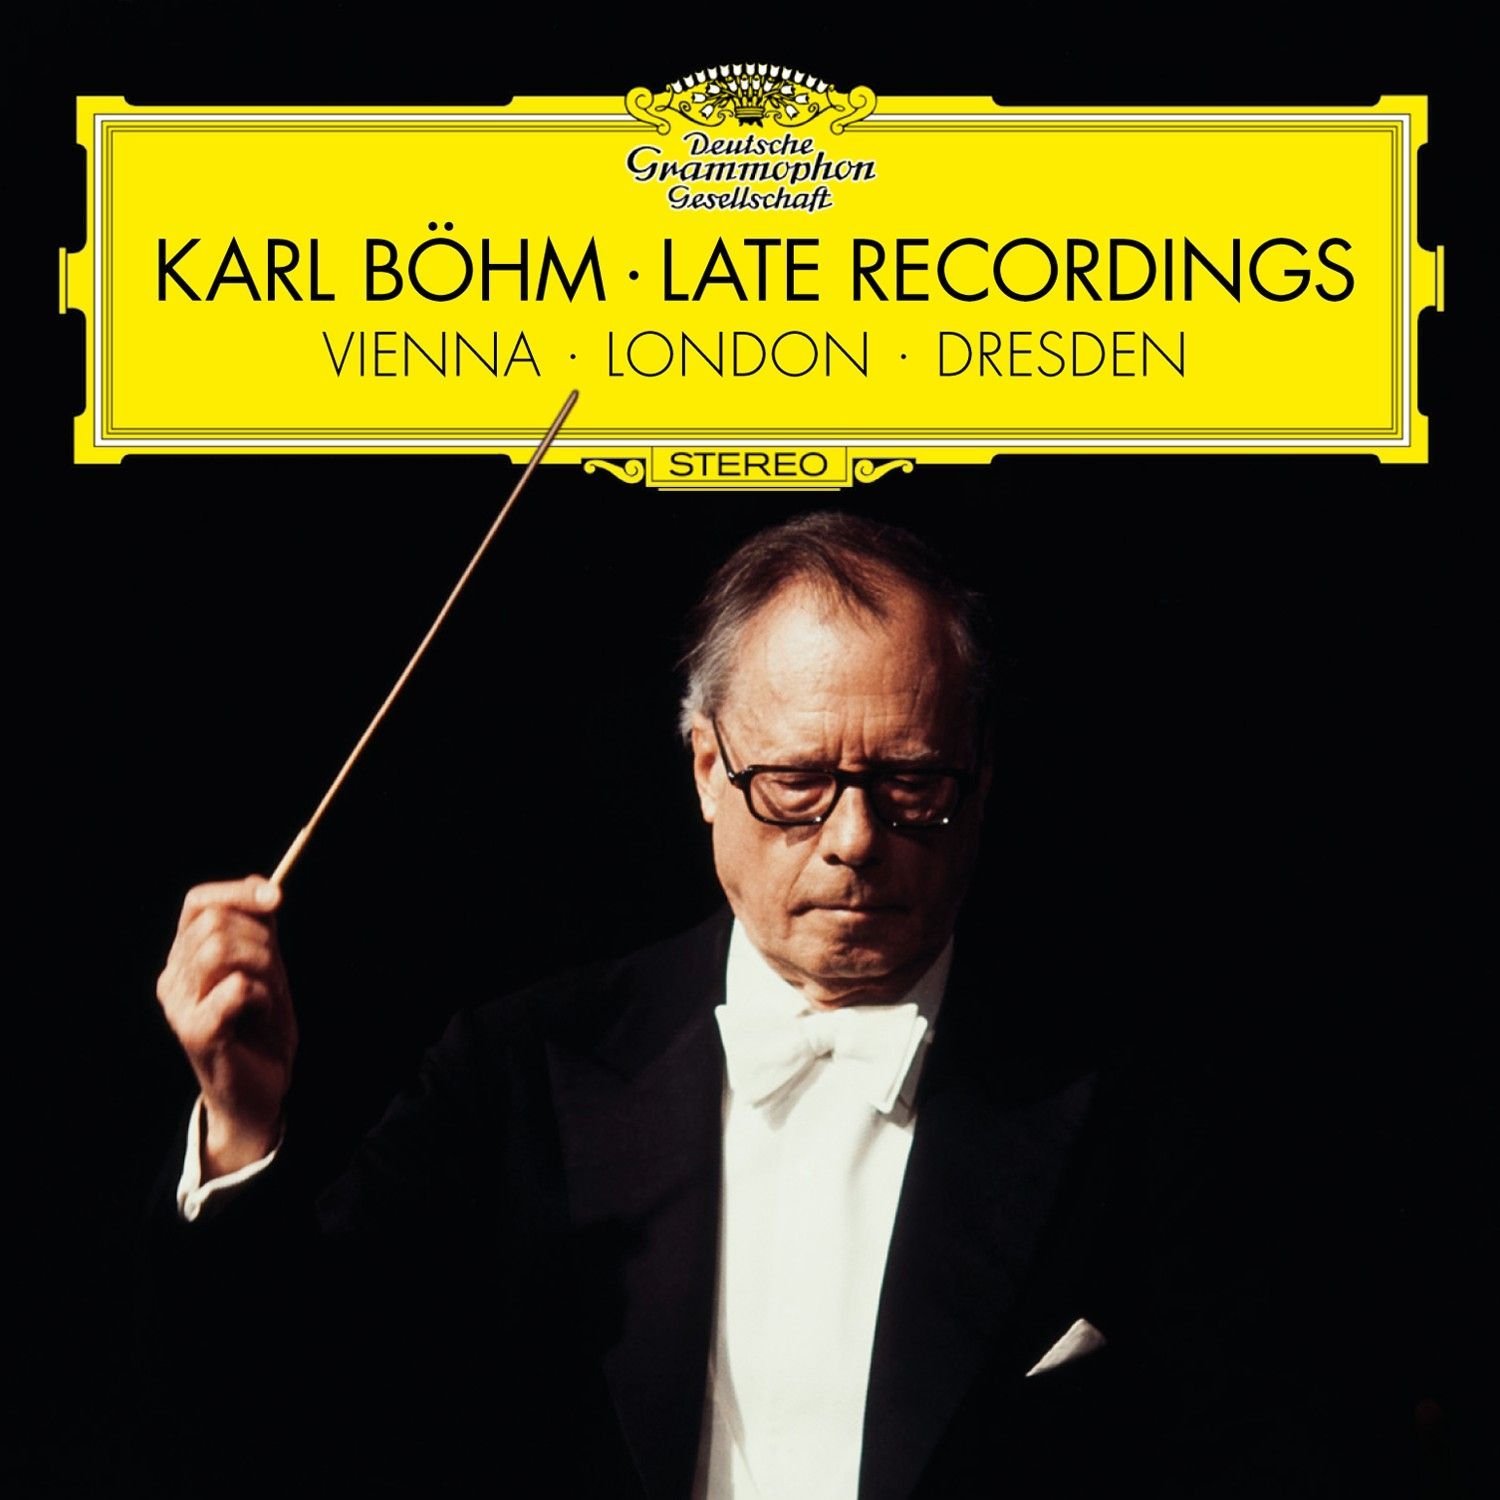 karl bohm late recordings